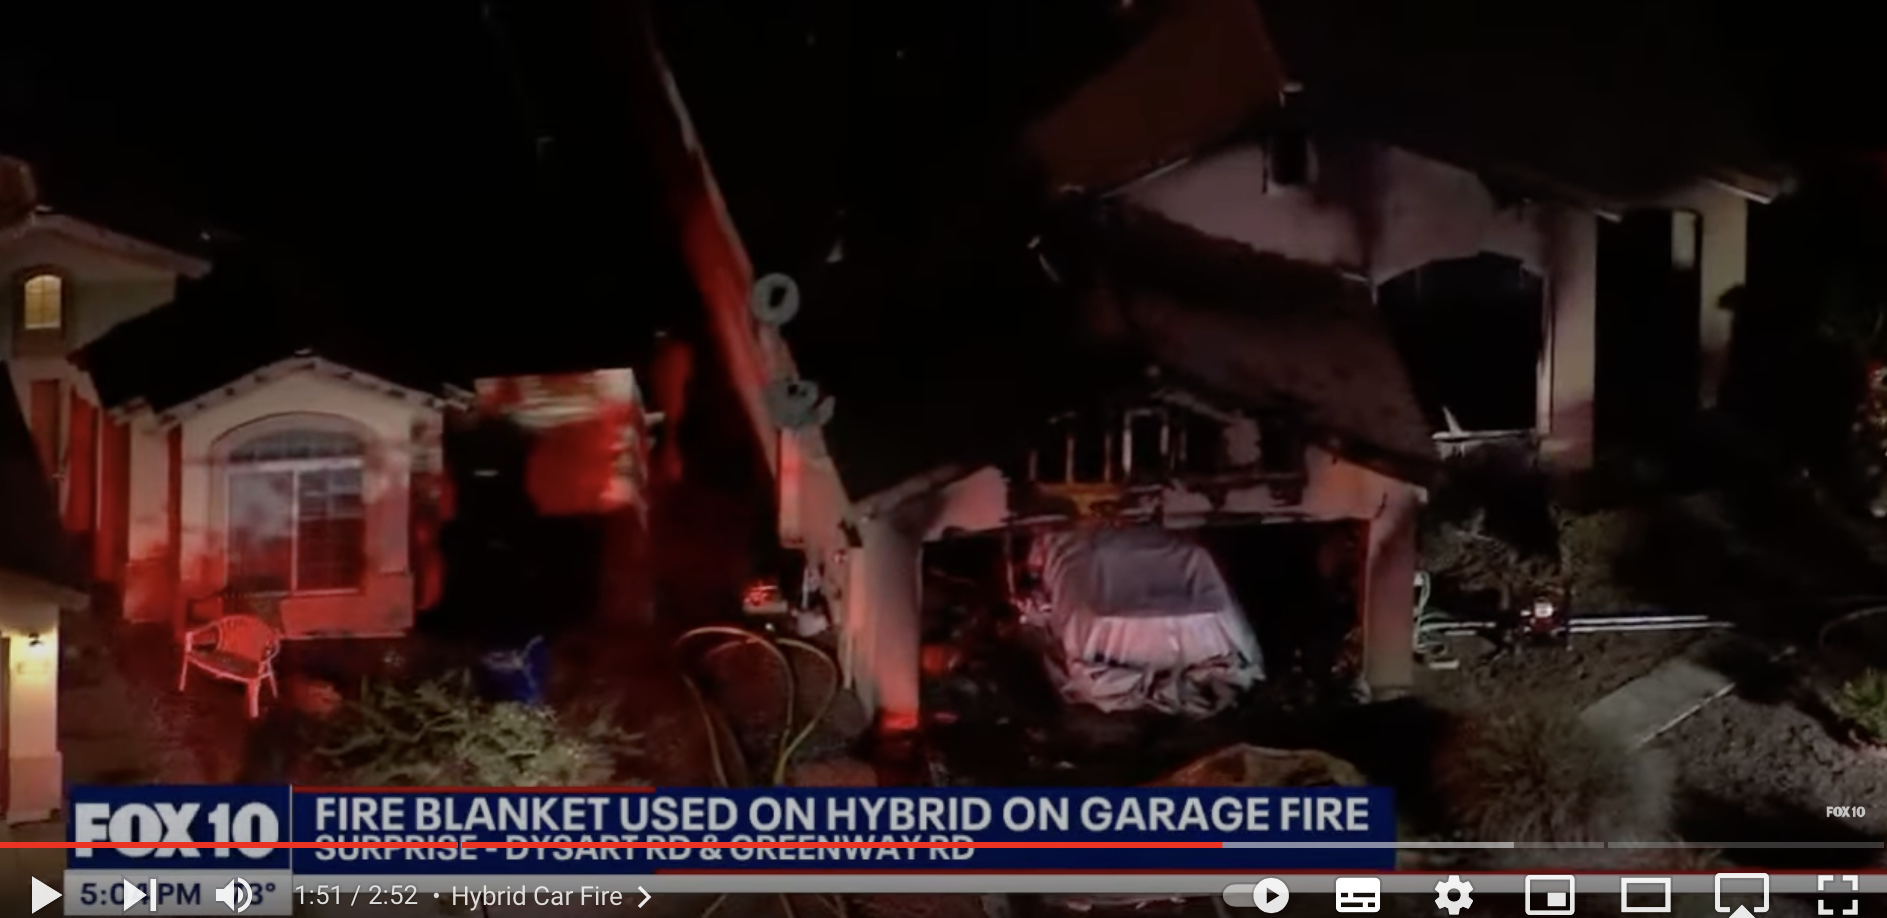 Fire blanket from Prosol UK used on hybrid vehicle garage fire